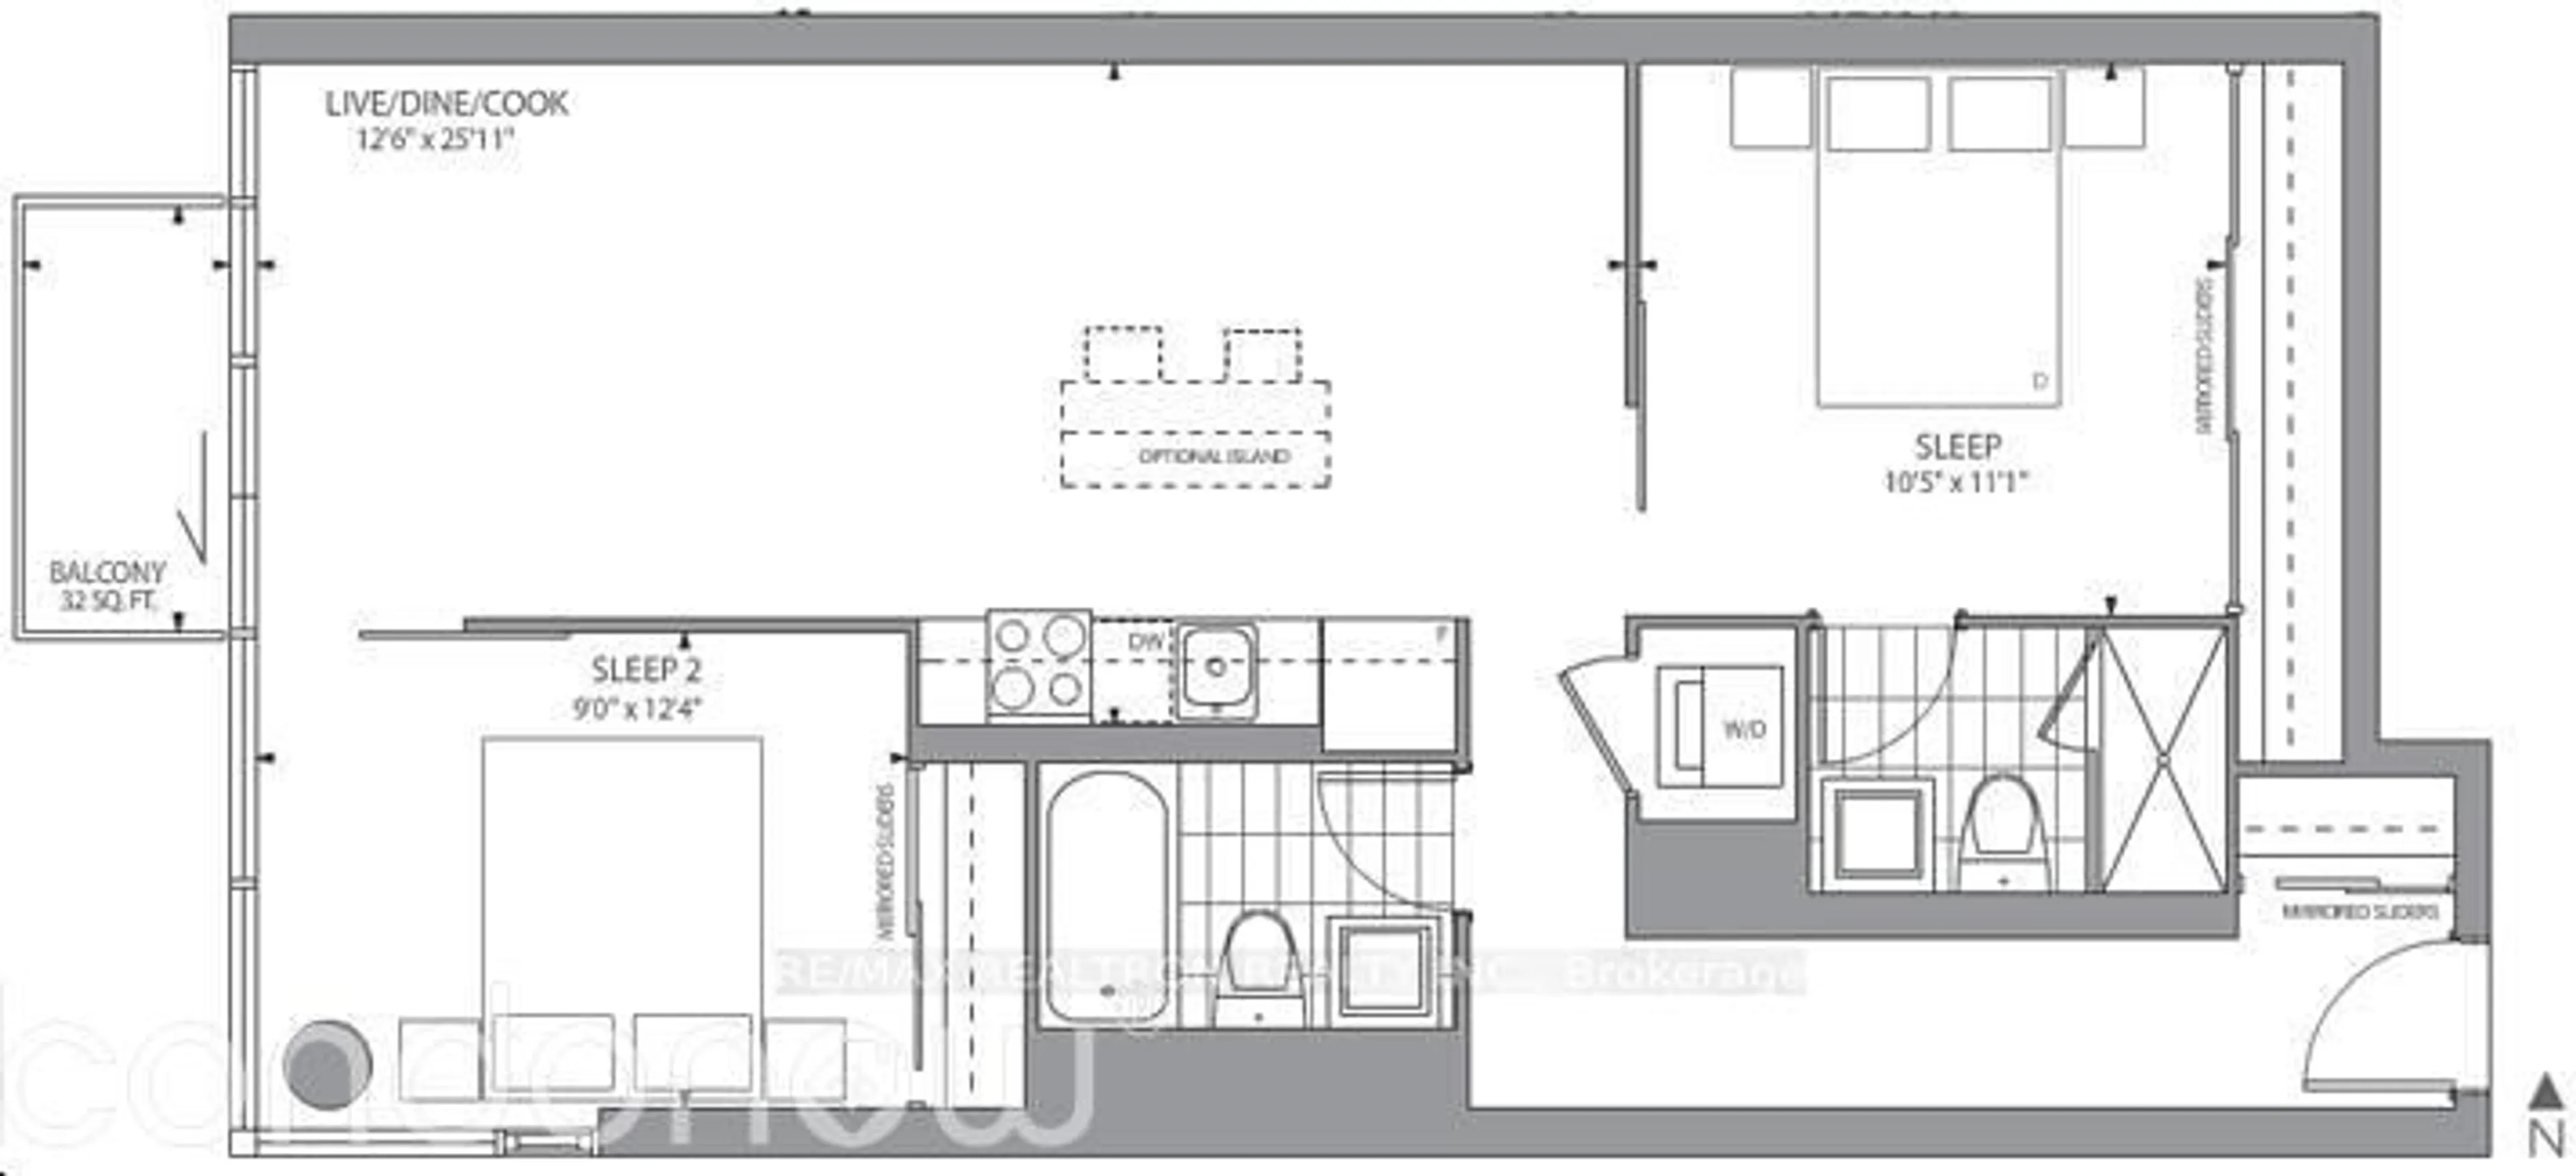 Floor plan for 2055 Danforth Ave #417, Toronto Ontario M4C 1J8